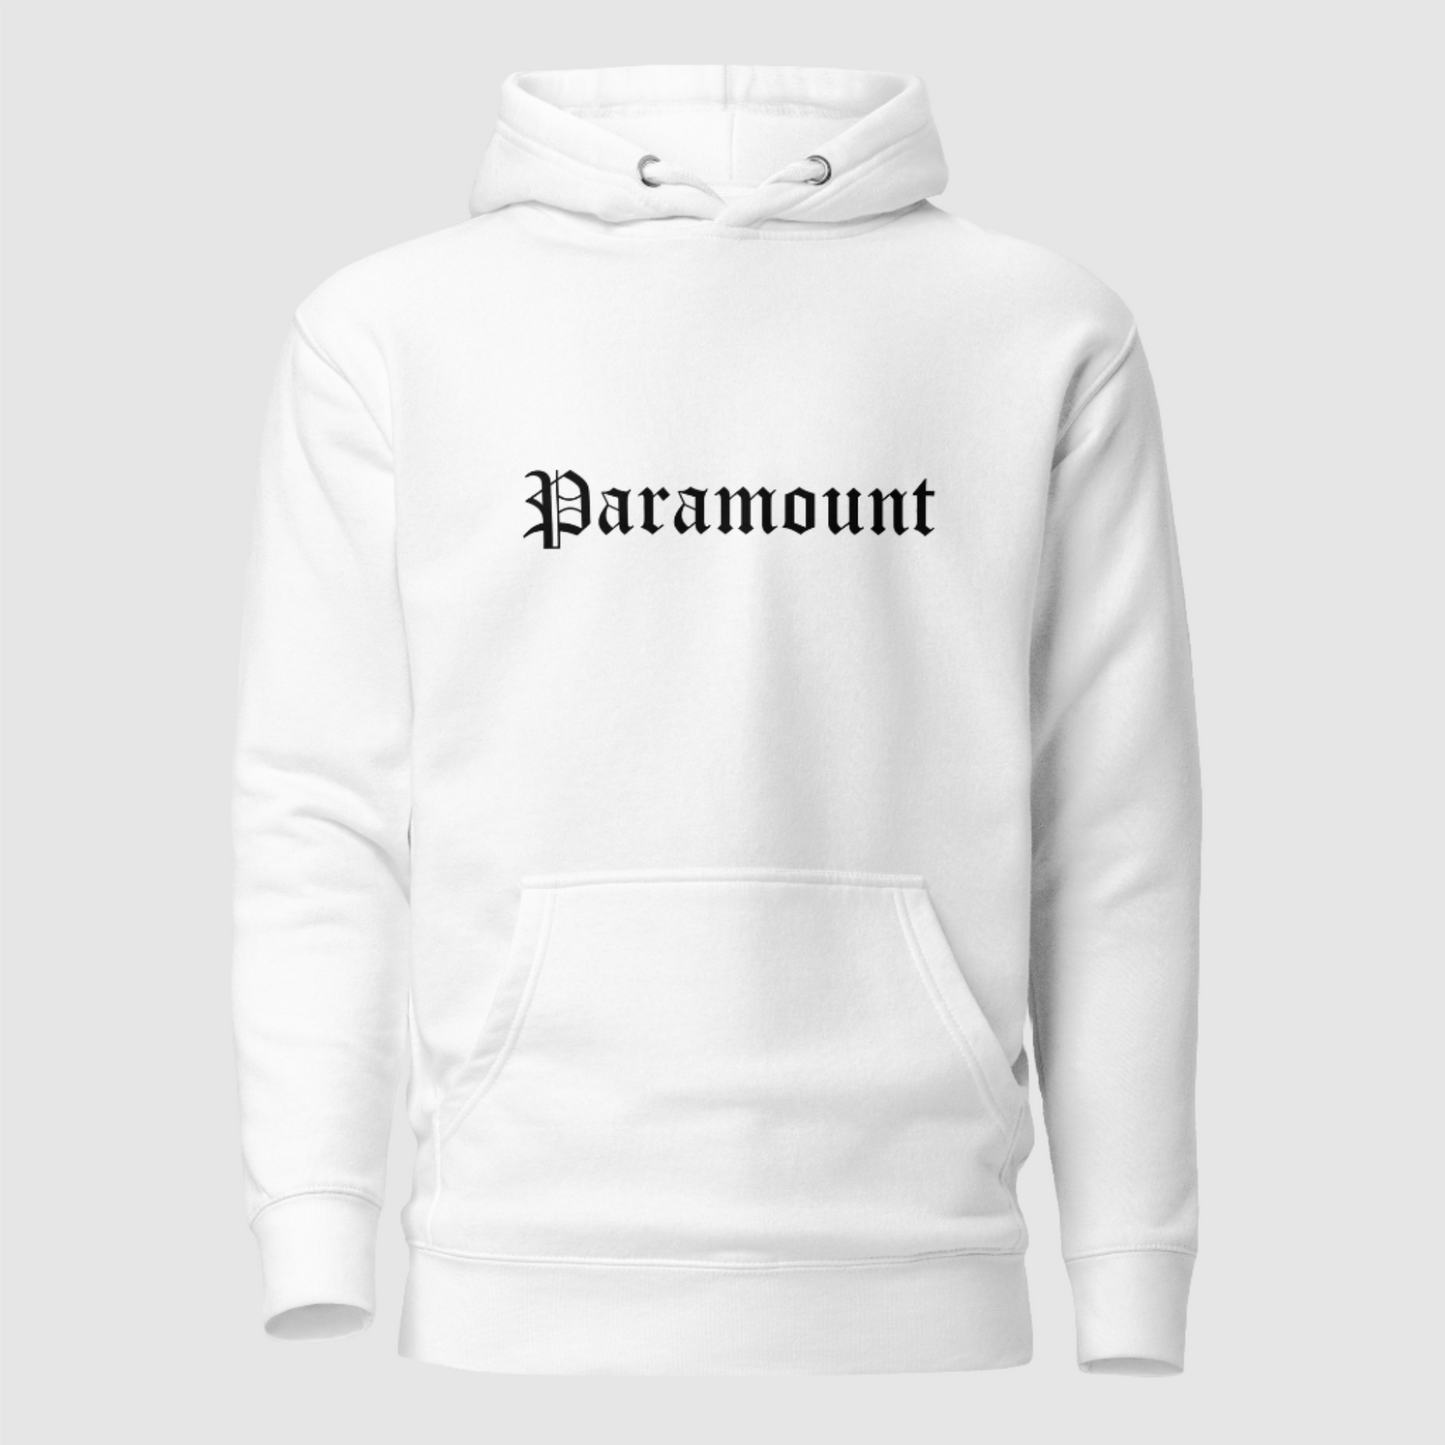 Get-Paramount Unisex Hoodie